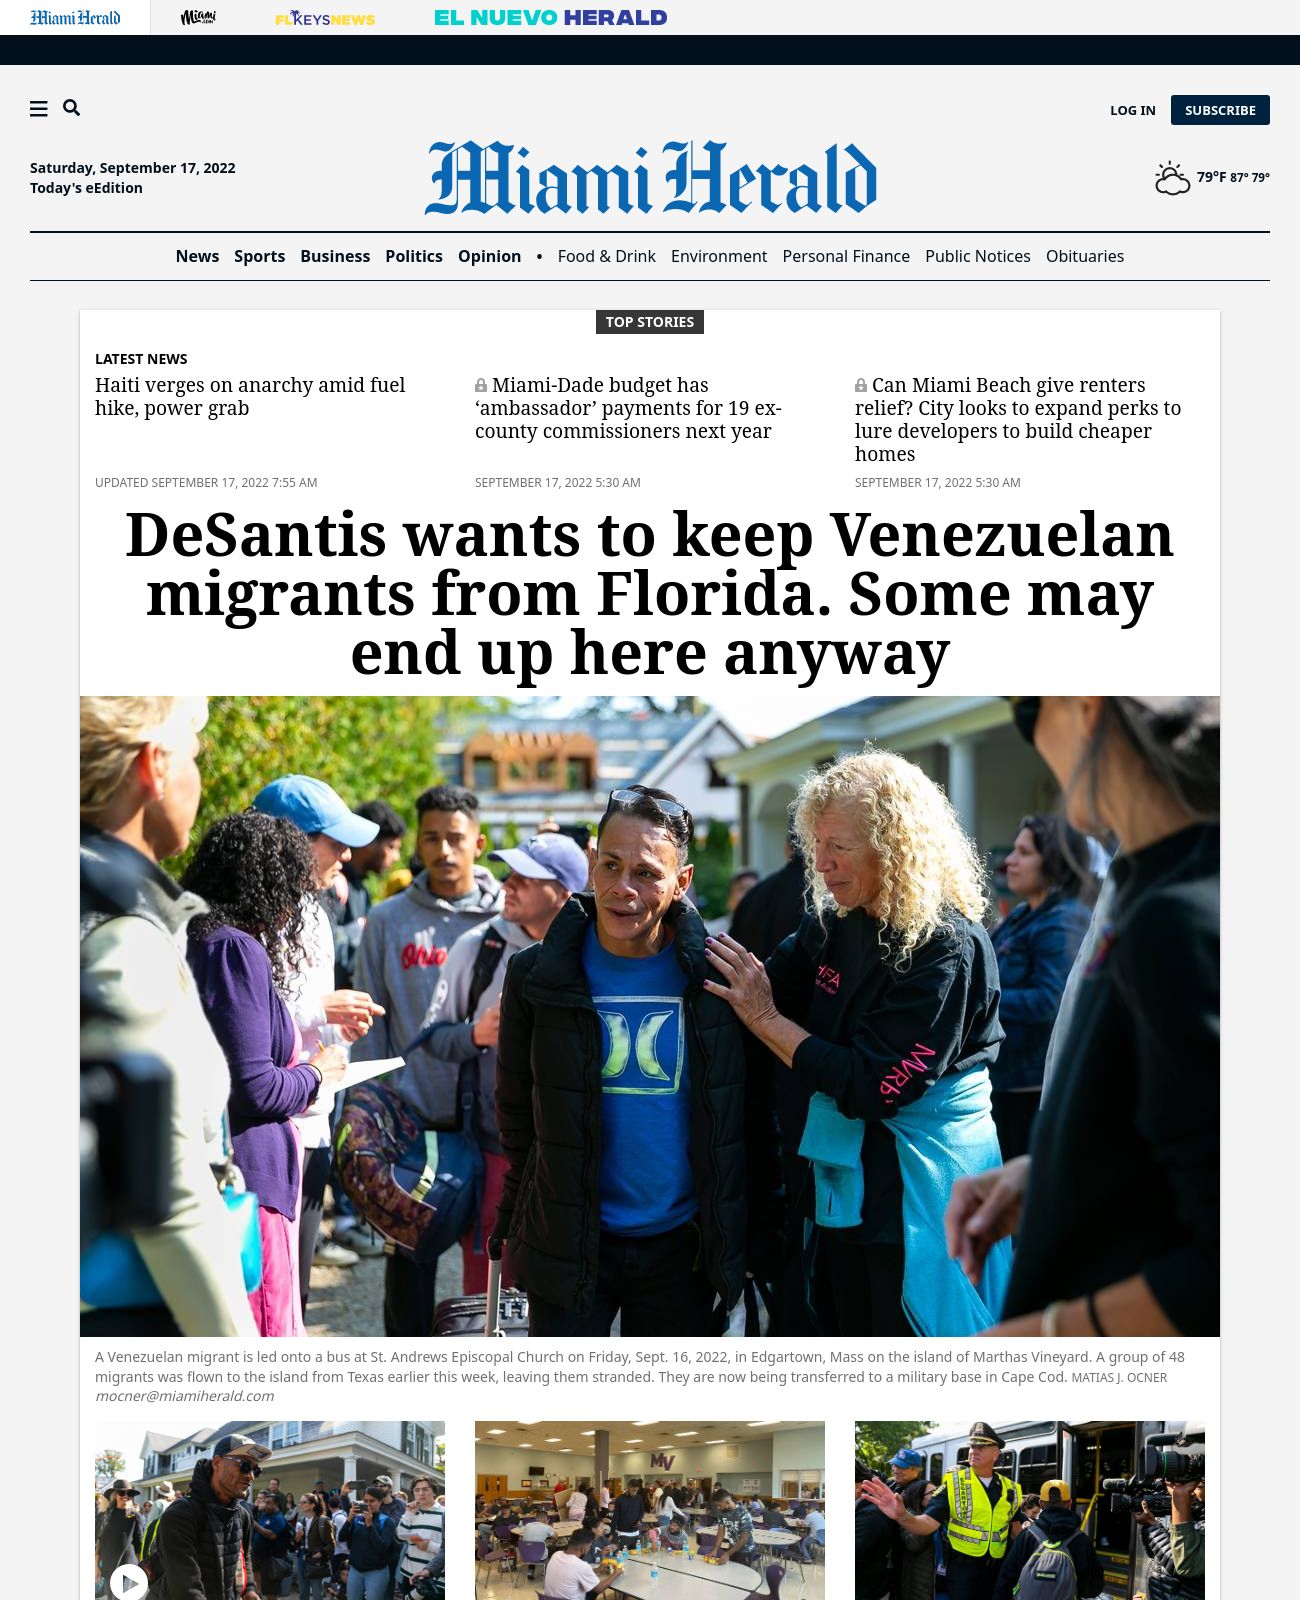 Miami Herald at 2022-09-17 08:58:26-04:00 local time